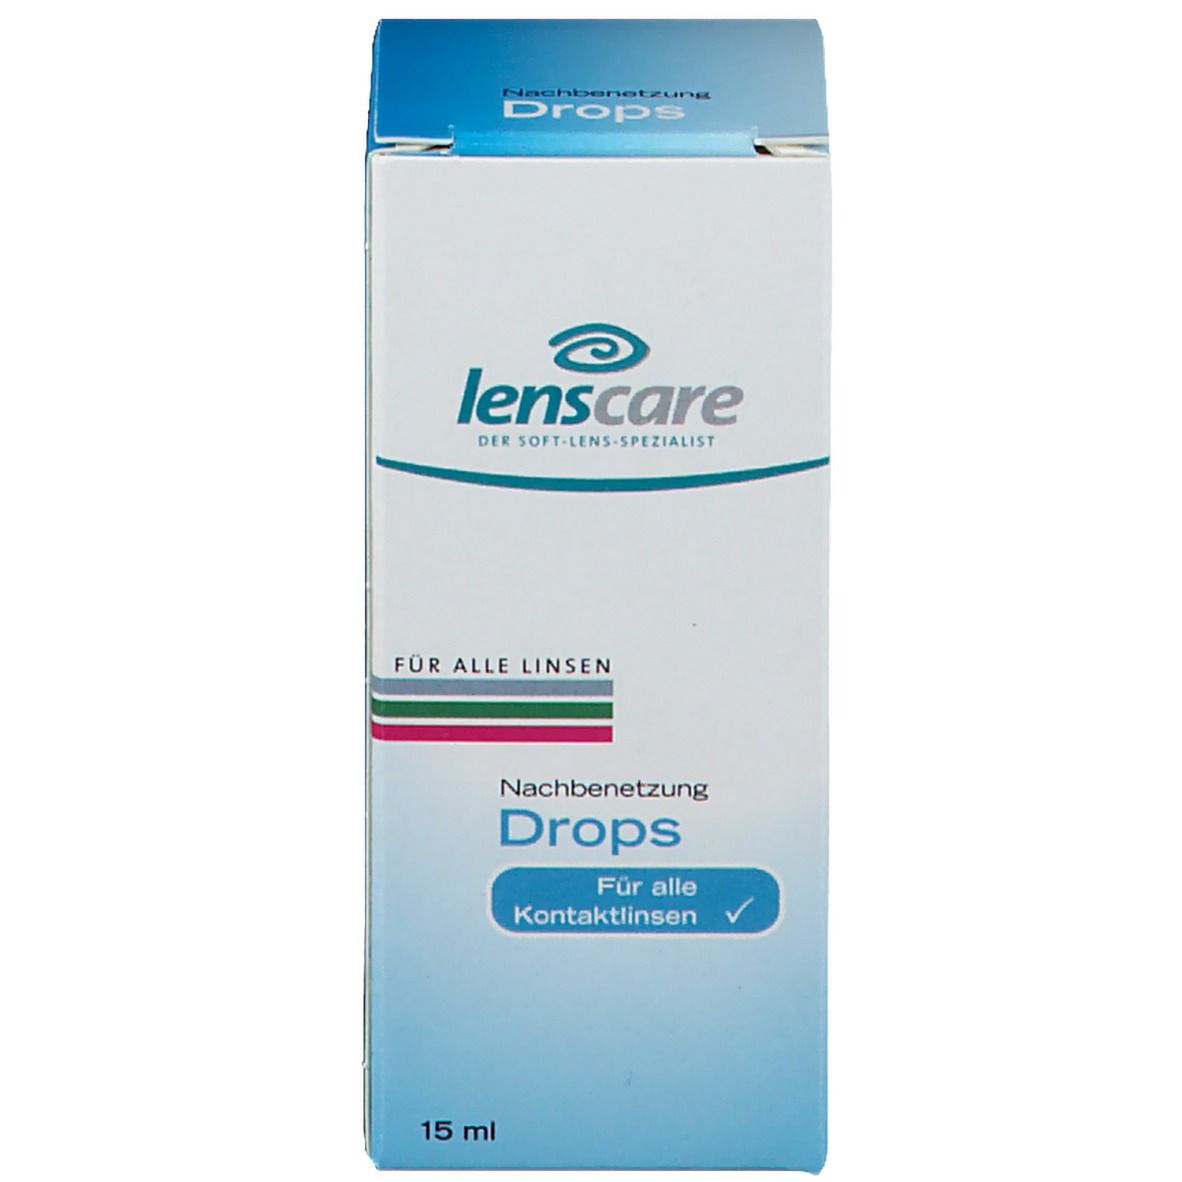 lenscare Drops